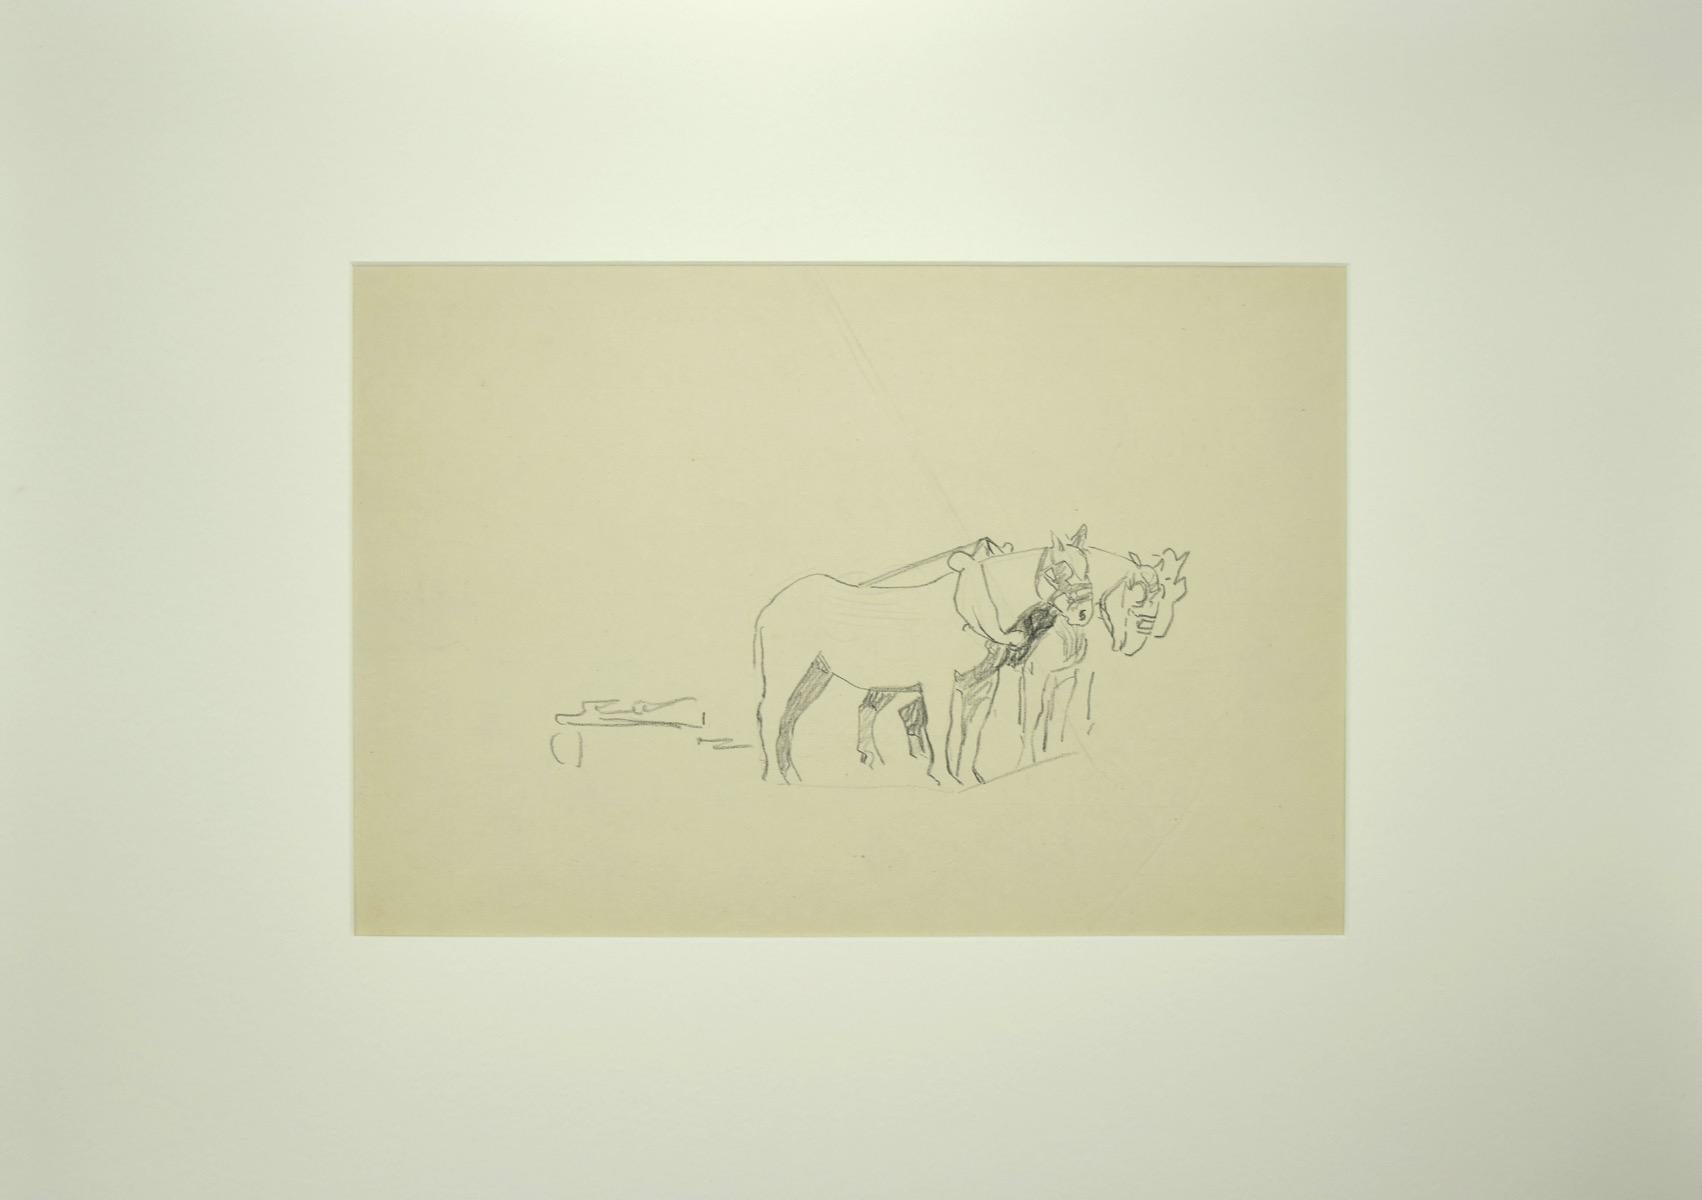 Draft horses - Original Pencil - Late 19th Century